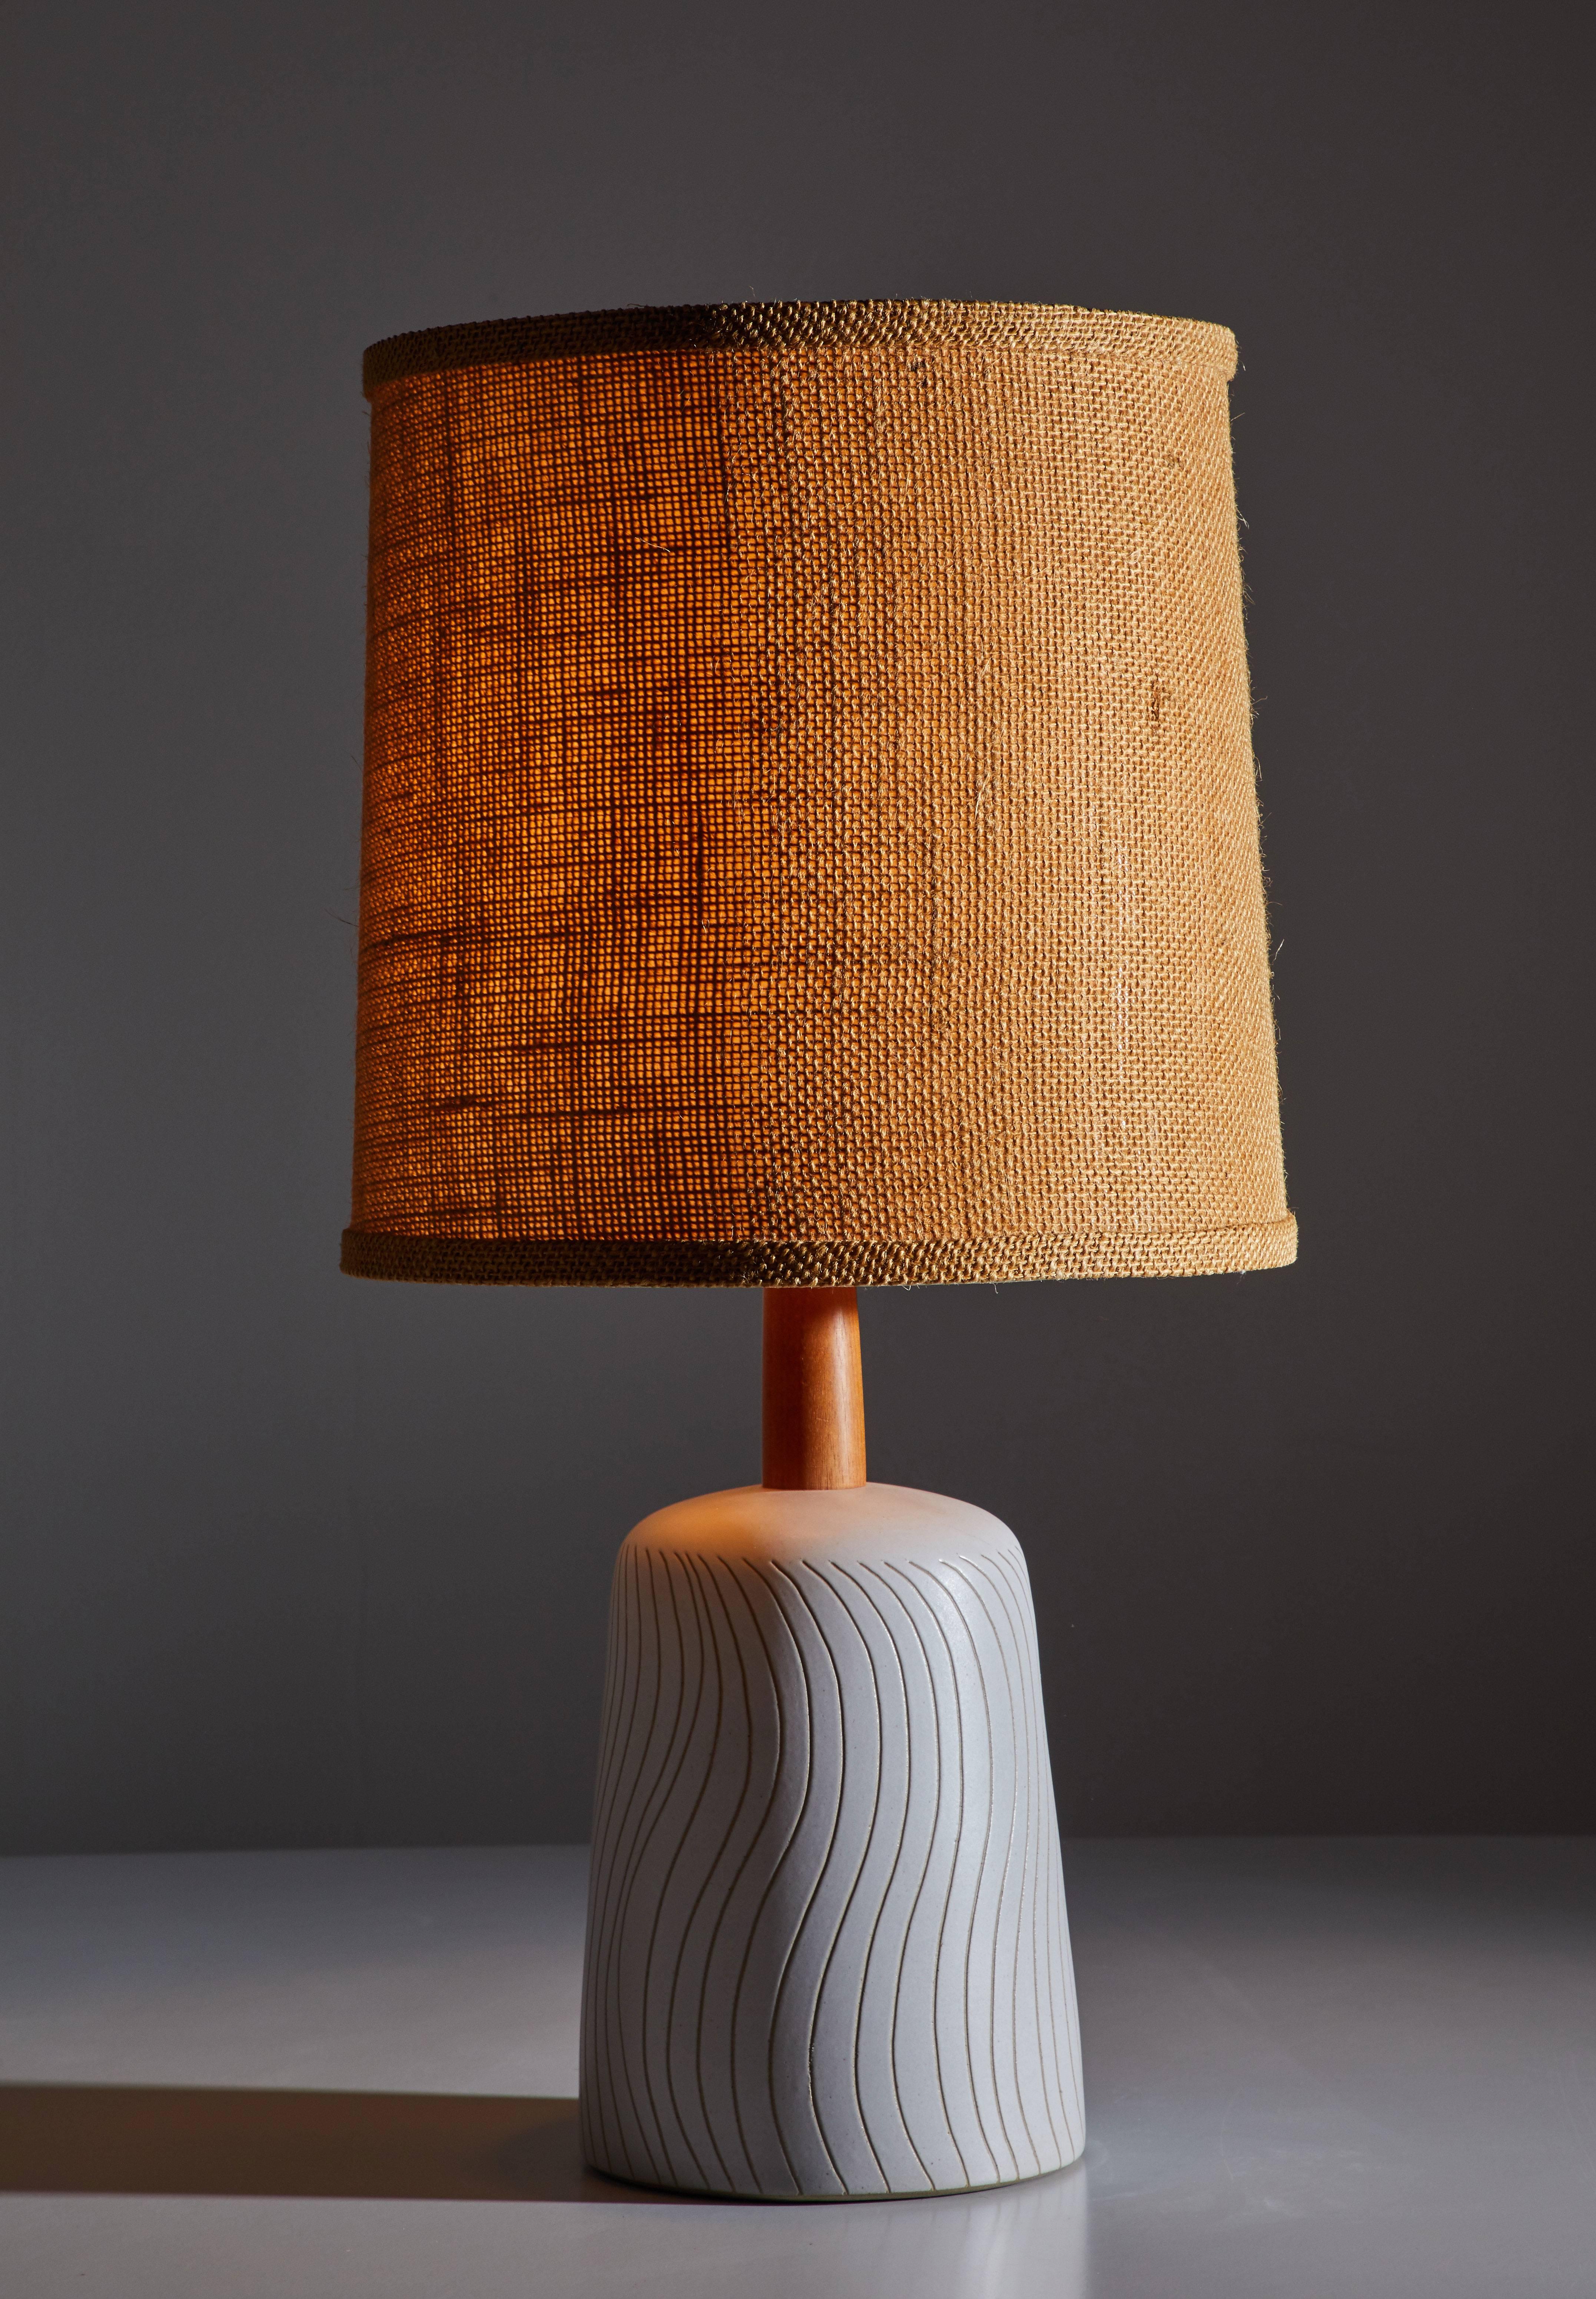 American Studio Table Lamp by Martz